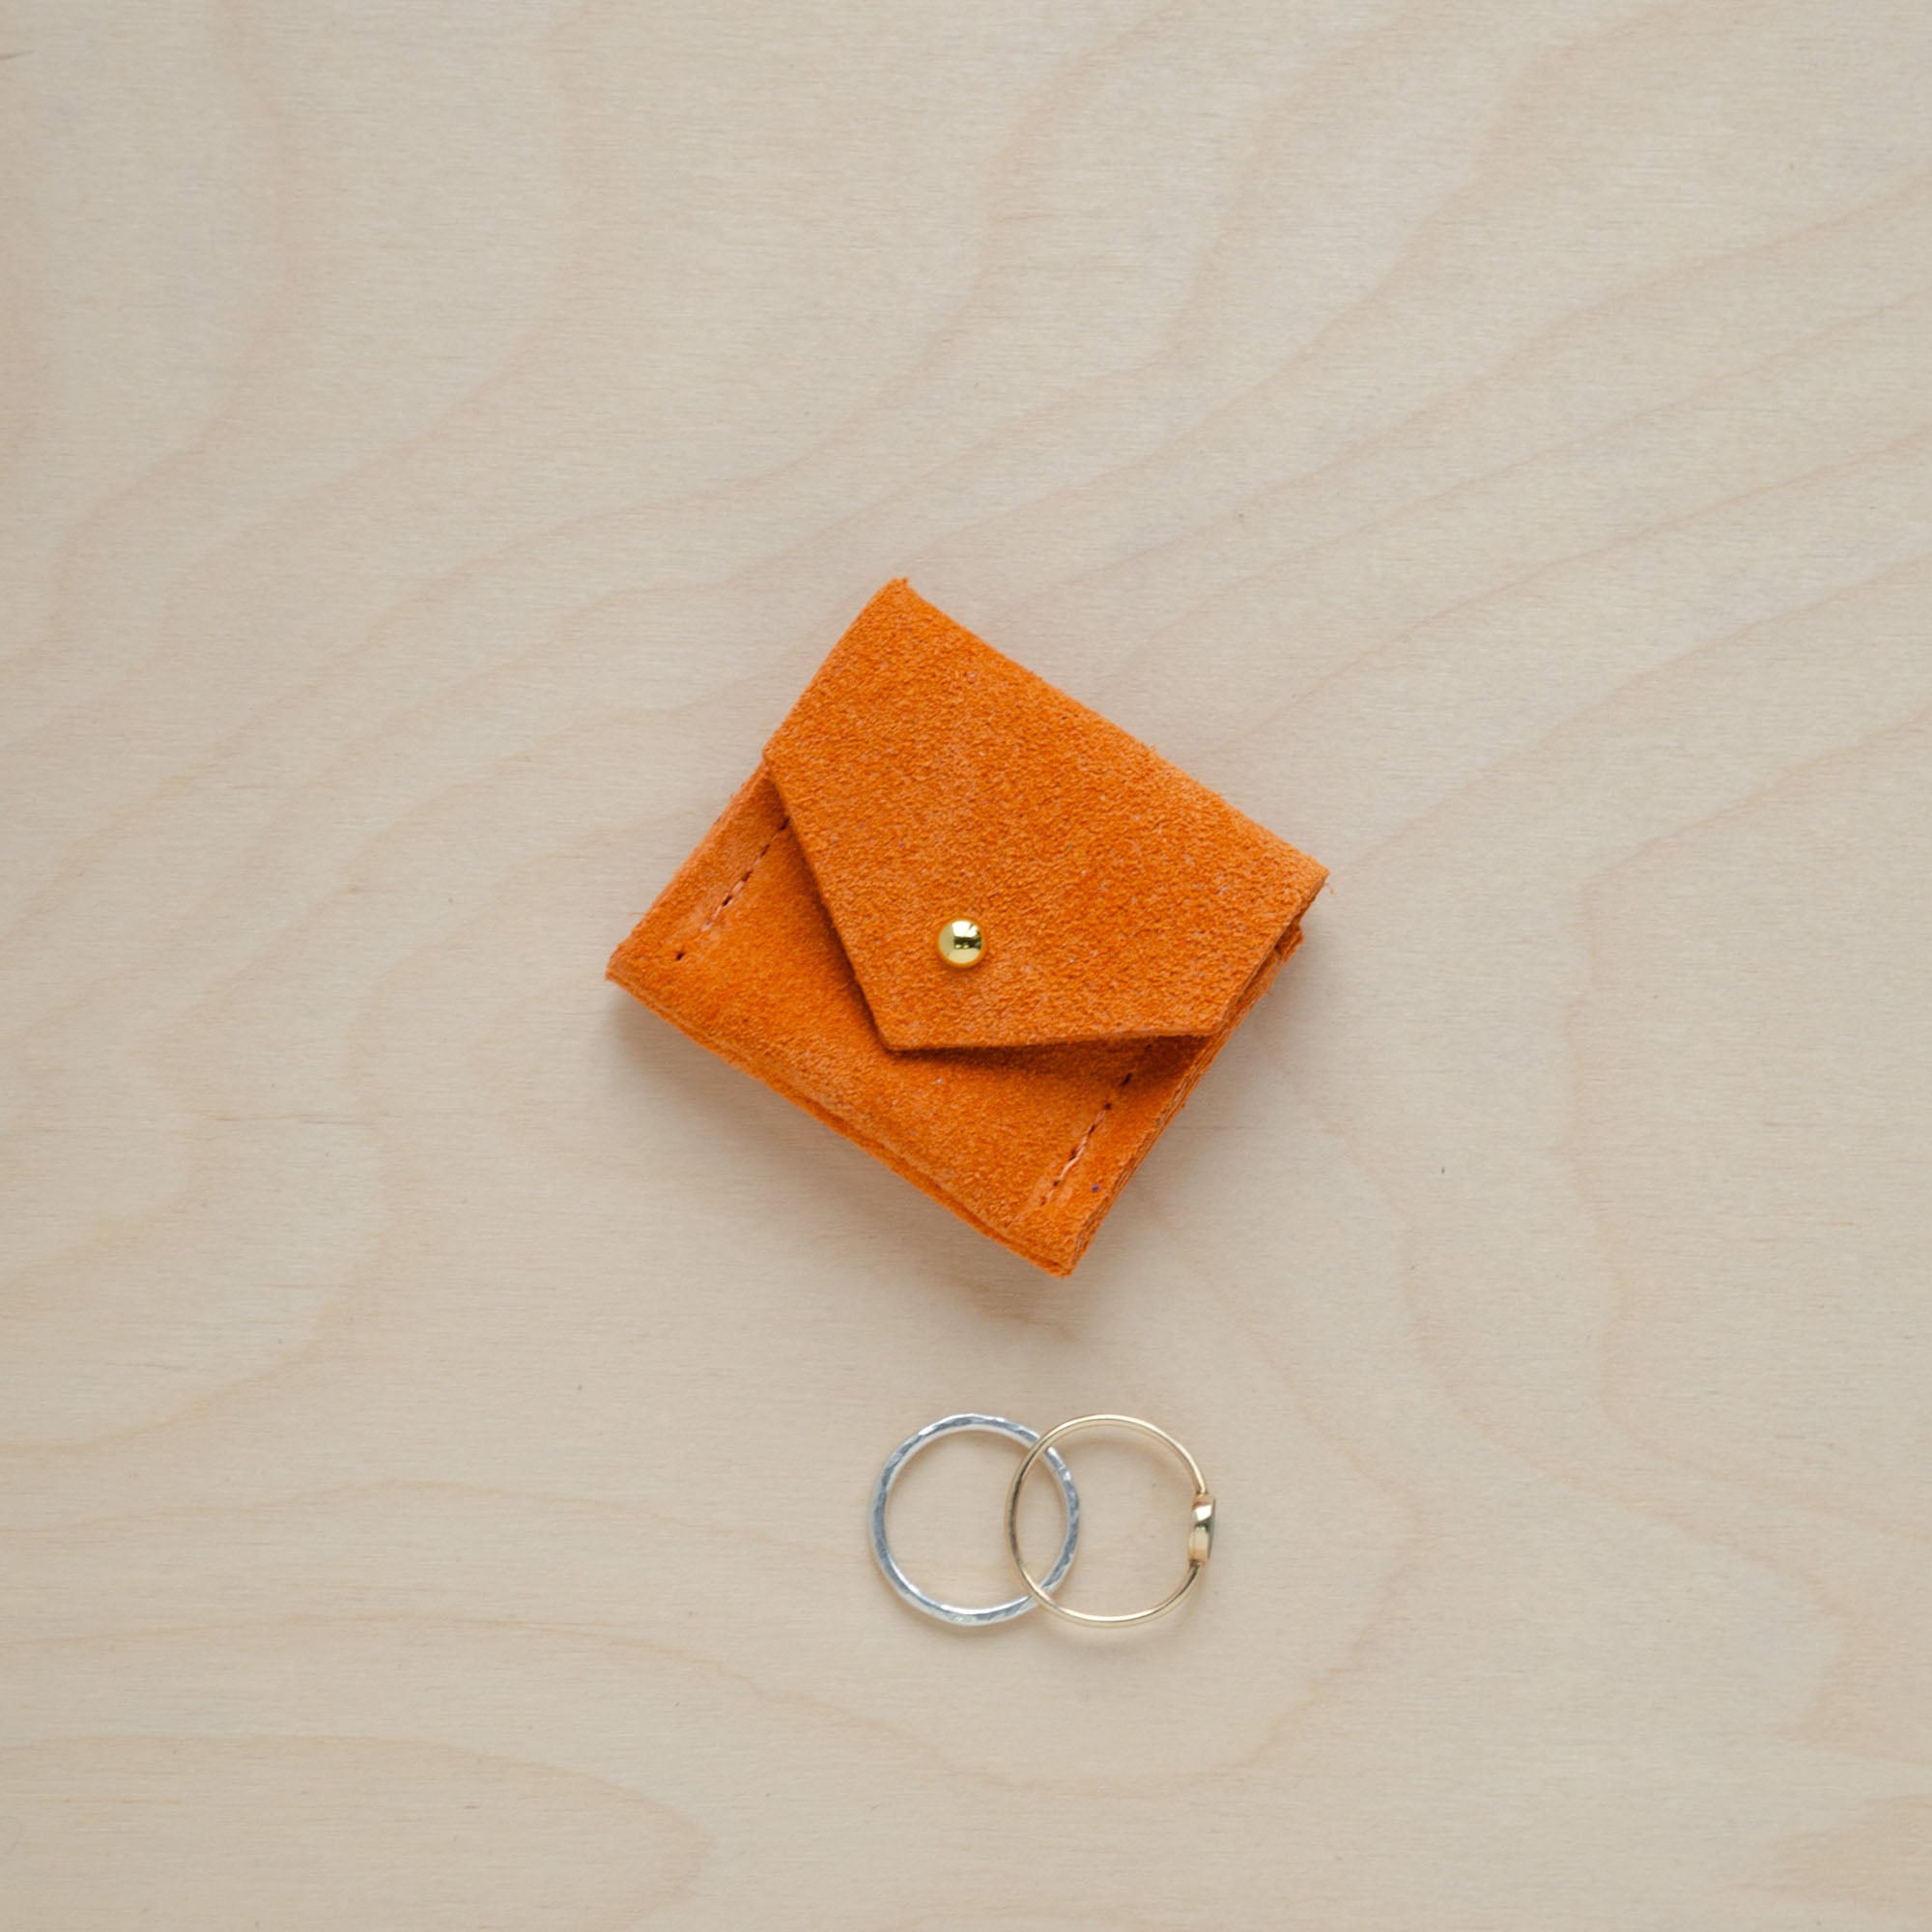 Clementine Orange Wedding Ring Pouch in suede.